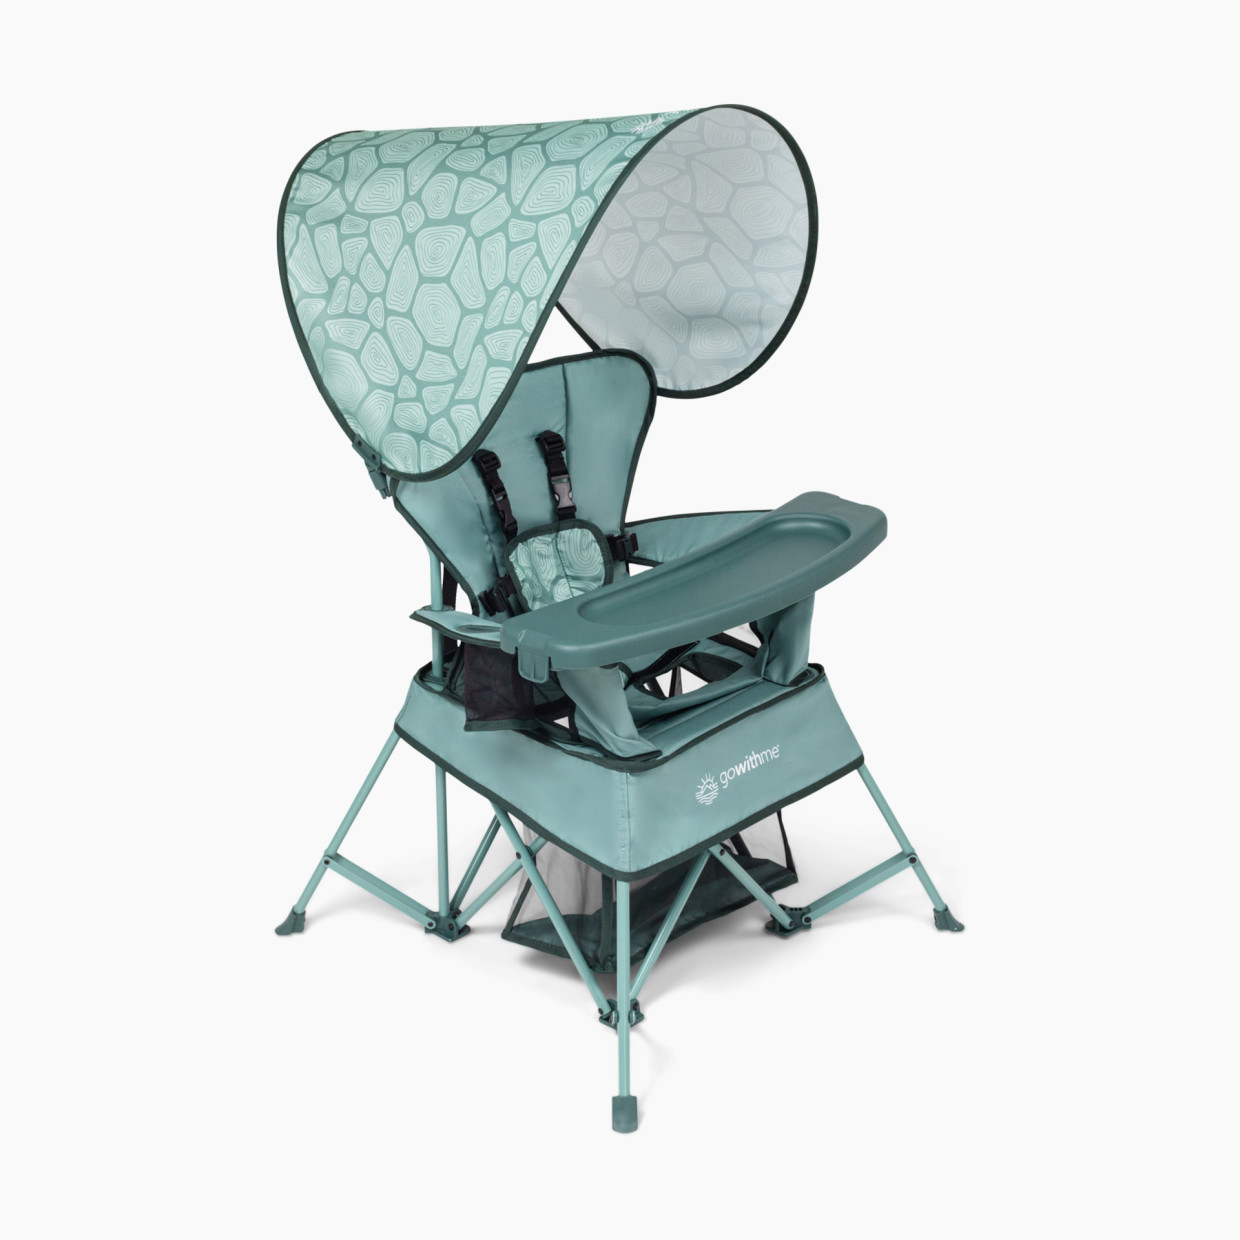 Baby Delight Go With Me Venture Deluxe Portable Chair - Green Garden.